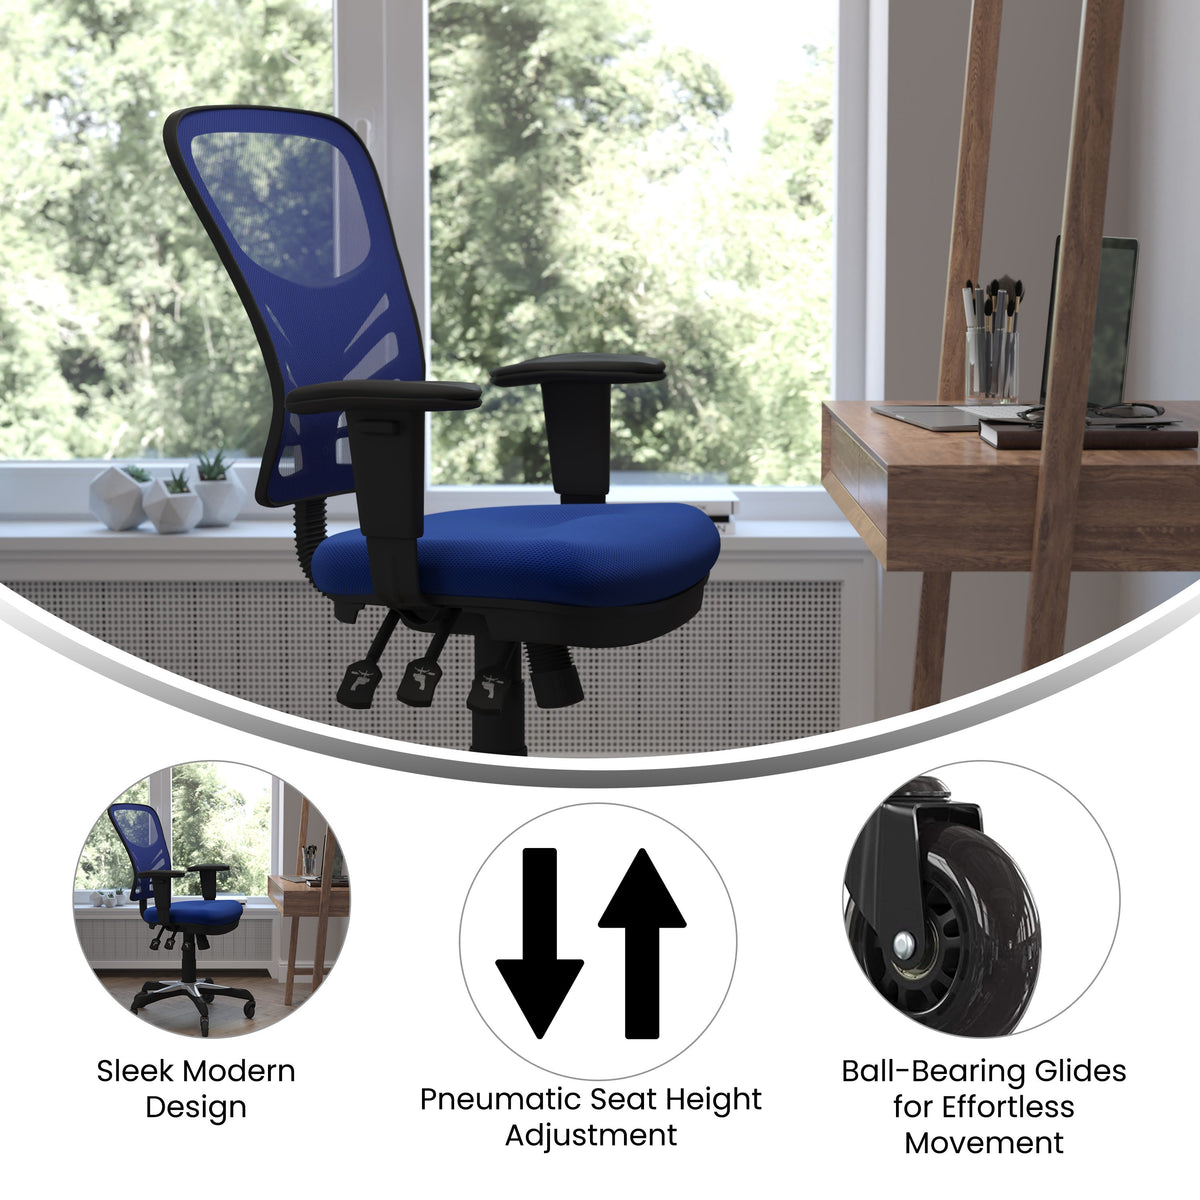 Blue/Black Frame |#| Mid-Back Ergonomic Multifunction Mesh Chair with Polyurethane Wheels-Blue